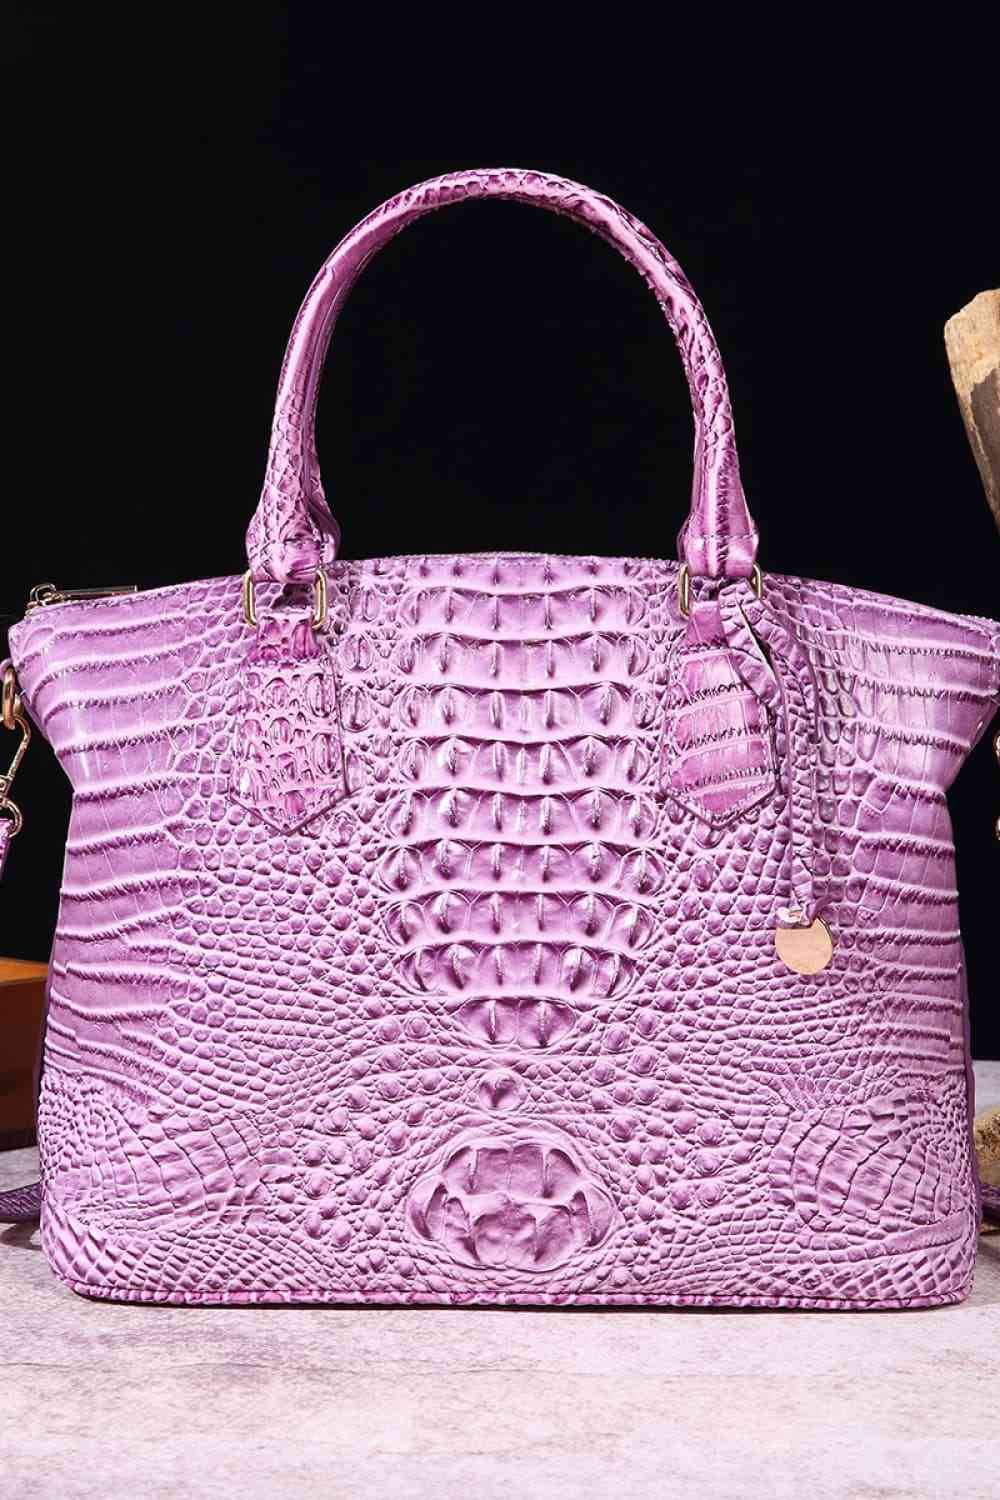 Designer PU Leather Handbag